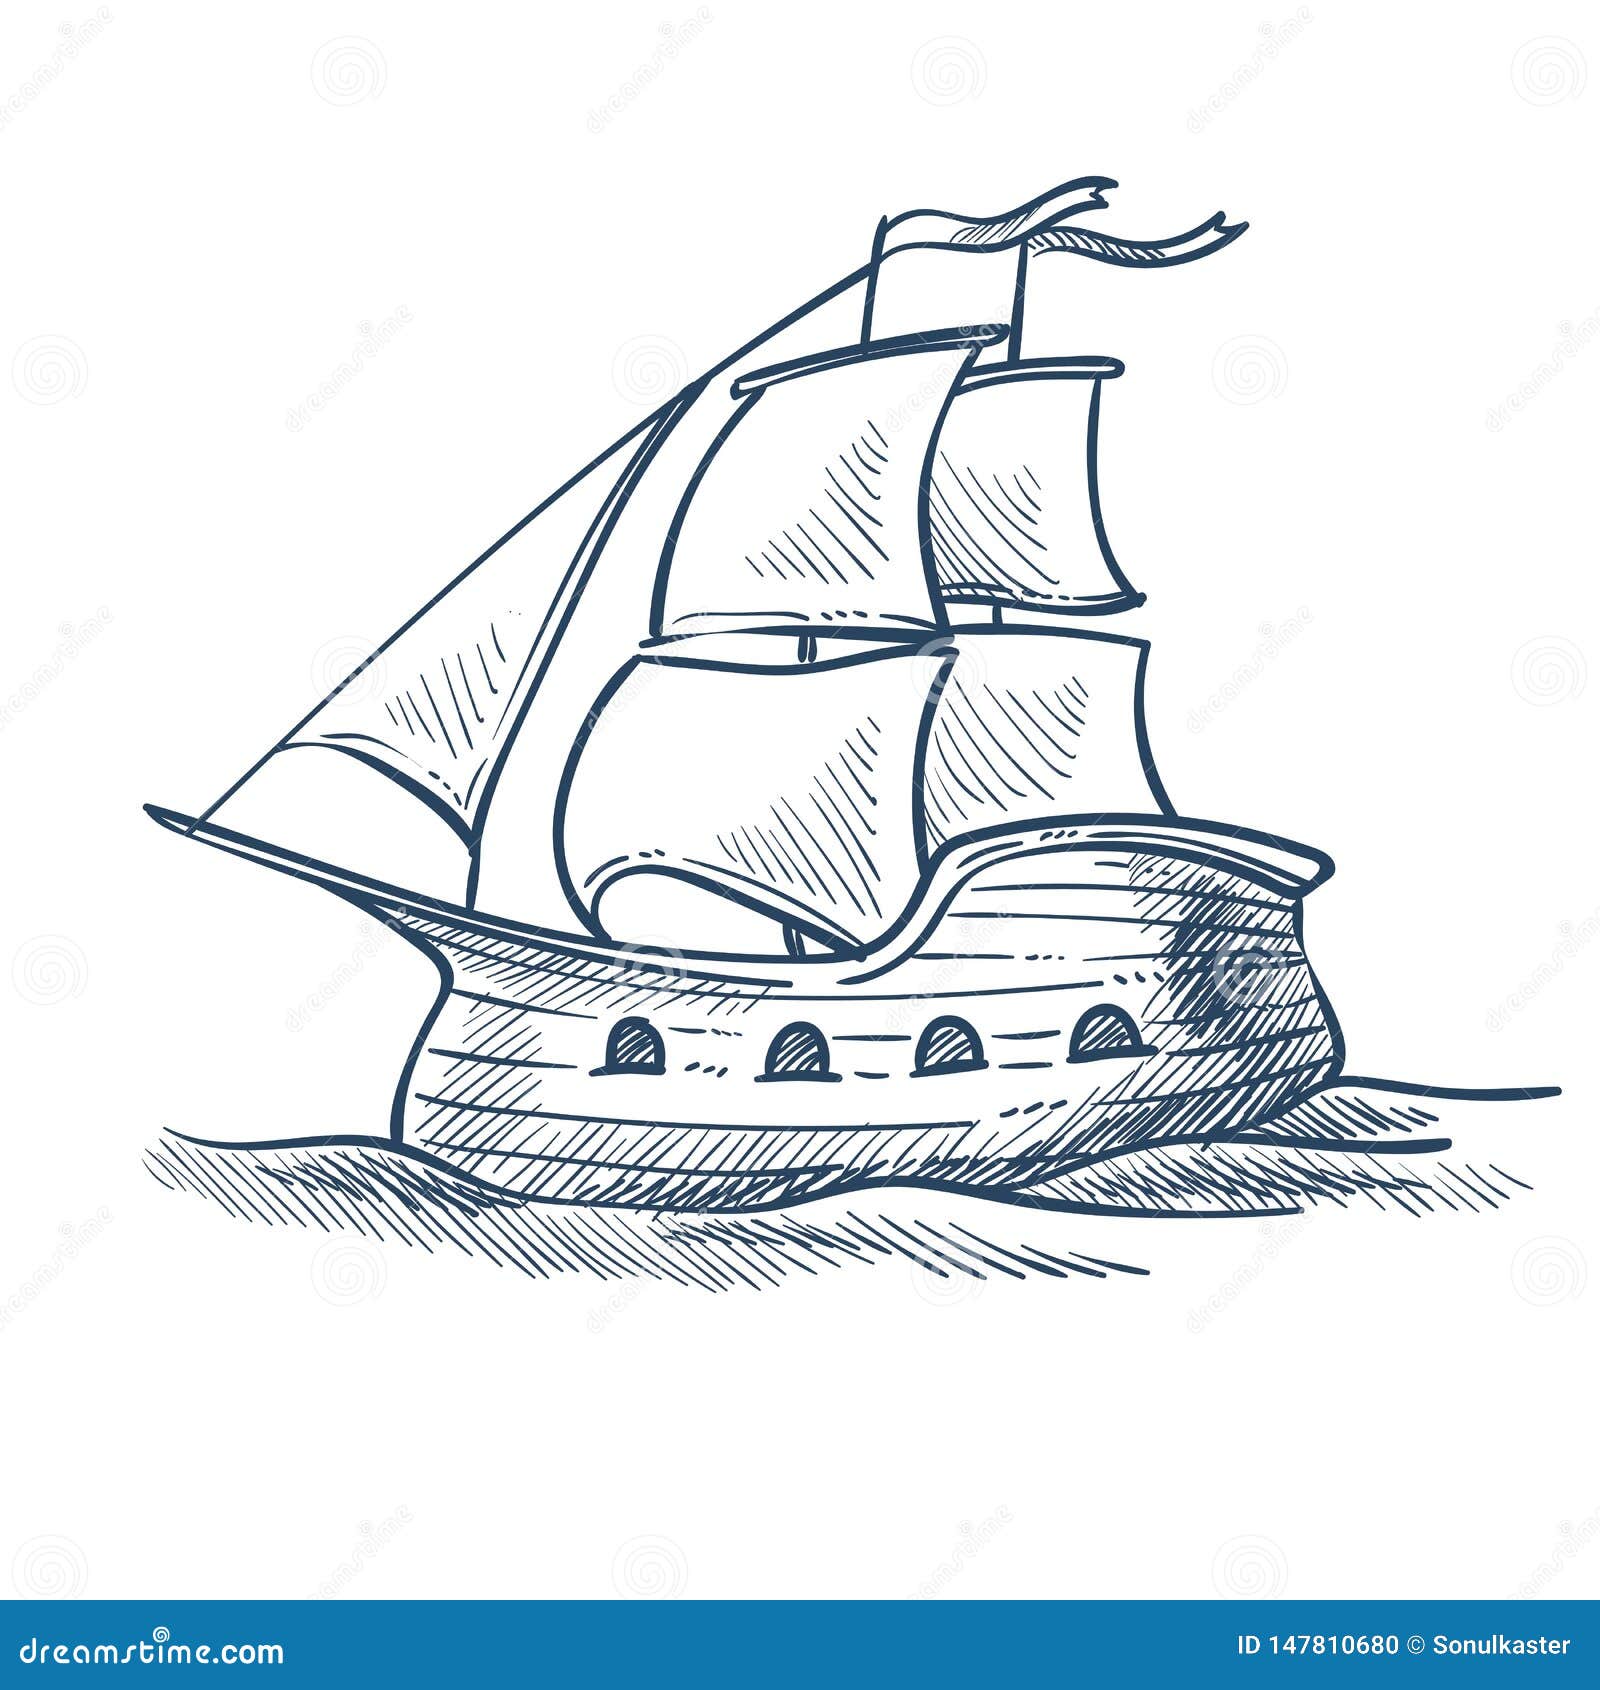 voyage boat drawing